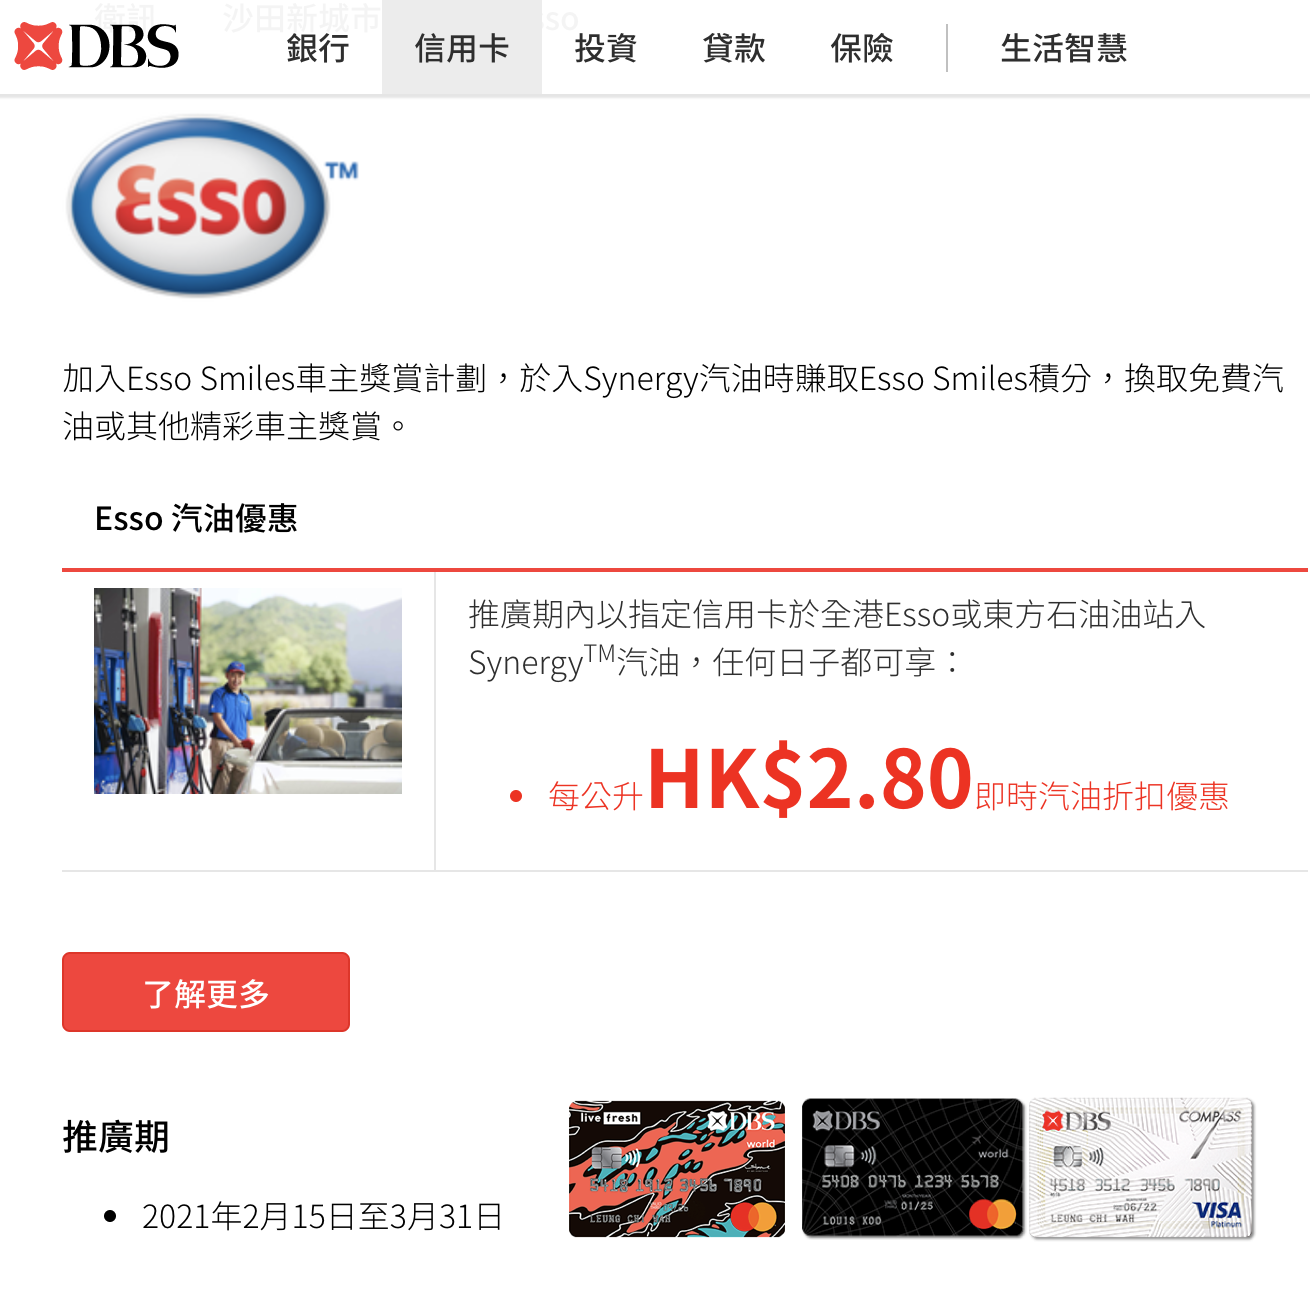 【DBS信用卡Esso入油優惠】每公升HK$2.80即時汽油折扣優惠！